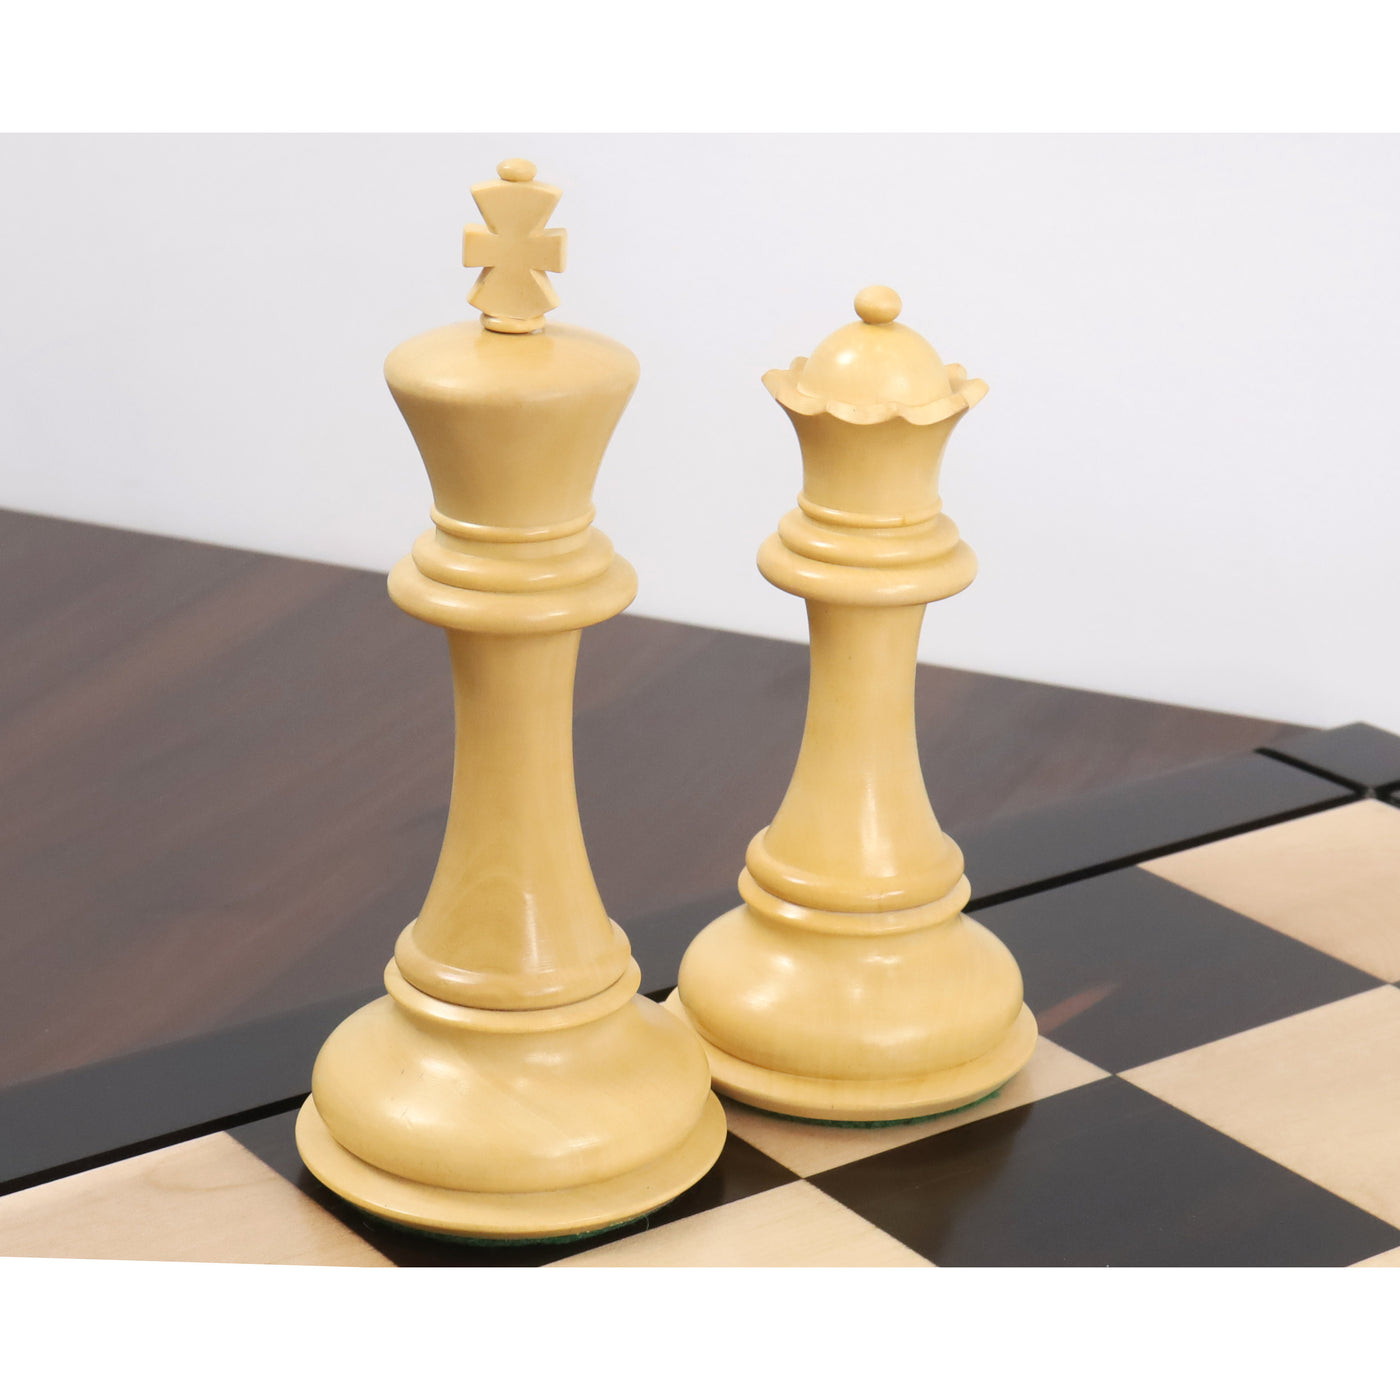 6.3" Jumbo Pro Staunton Luxury Chess Pieces Only Set -Bud Rosewood-Triple Weight